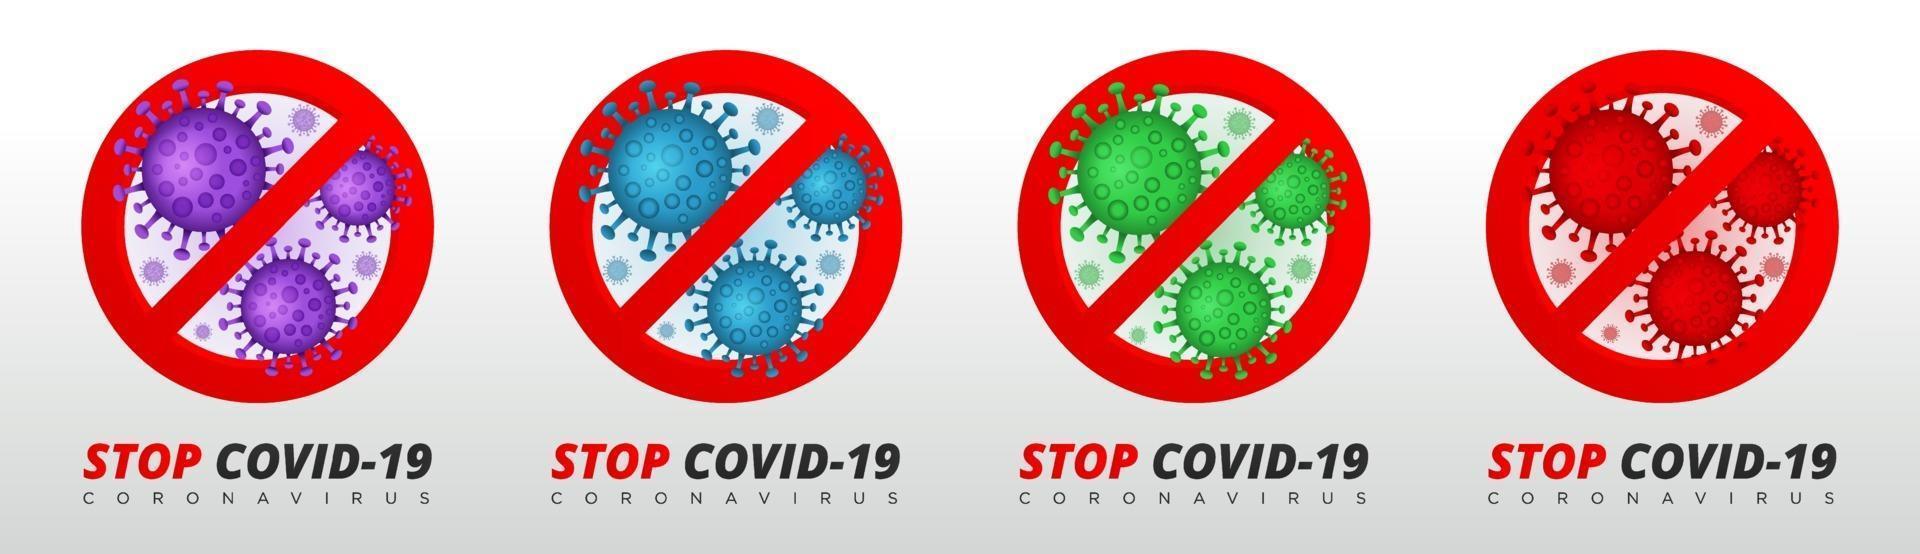 coronavirus pictogramserie. coronavirus covid 19, 2019 ncov-waarschuwing, nieuw virus is doorgestreept met rood stopbord, coronavirus-pandemie. vector illustratie.